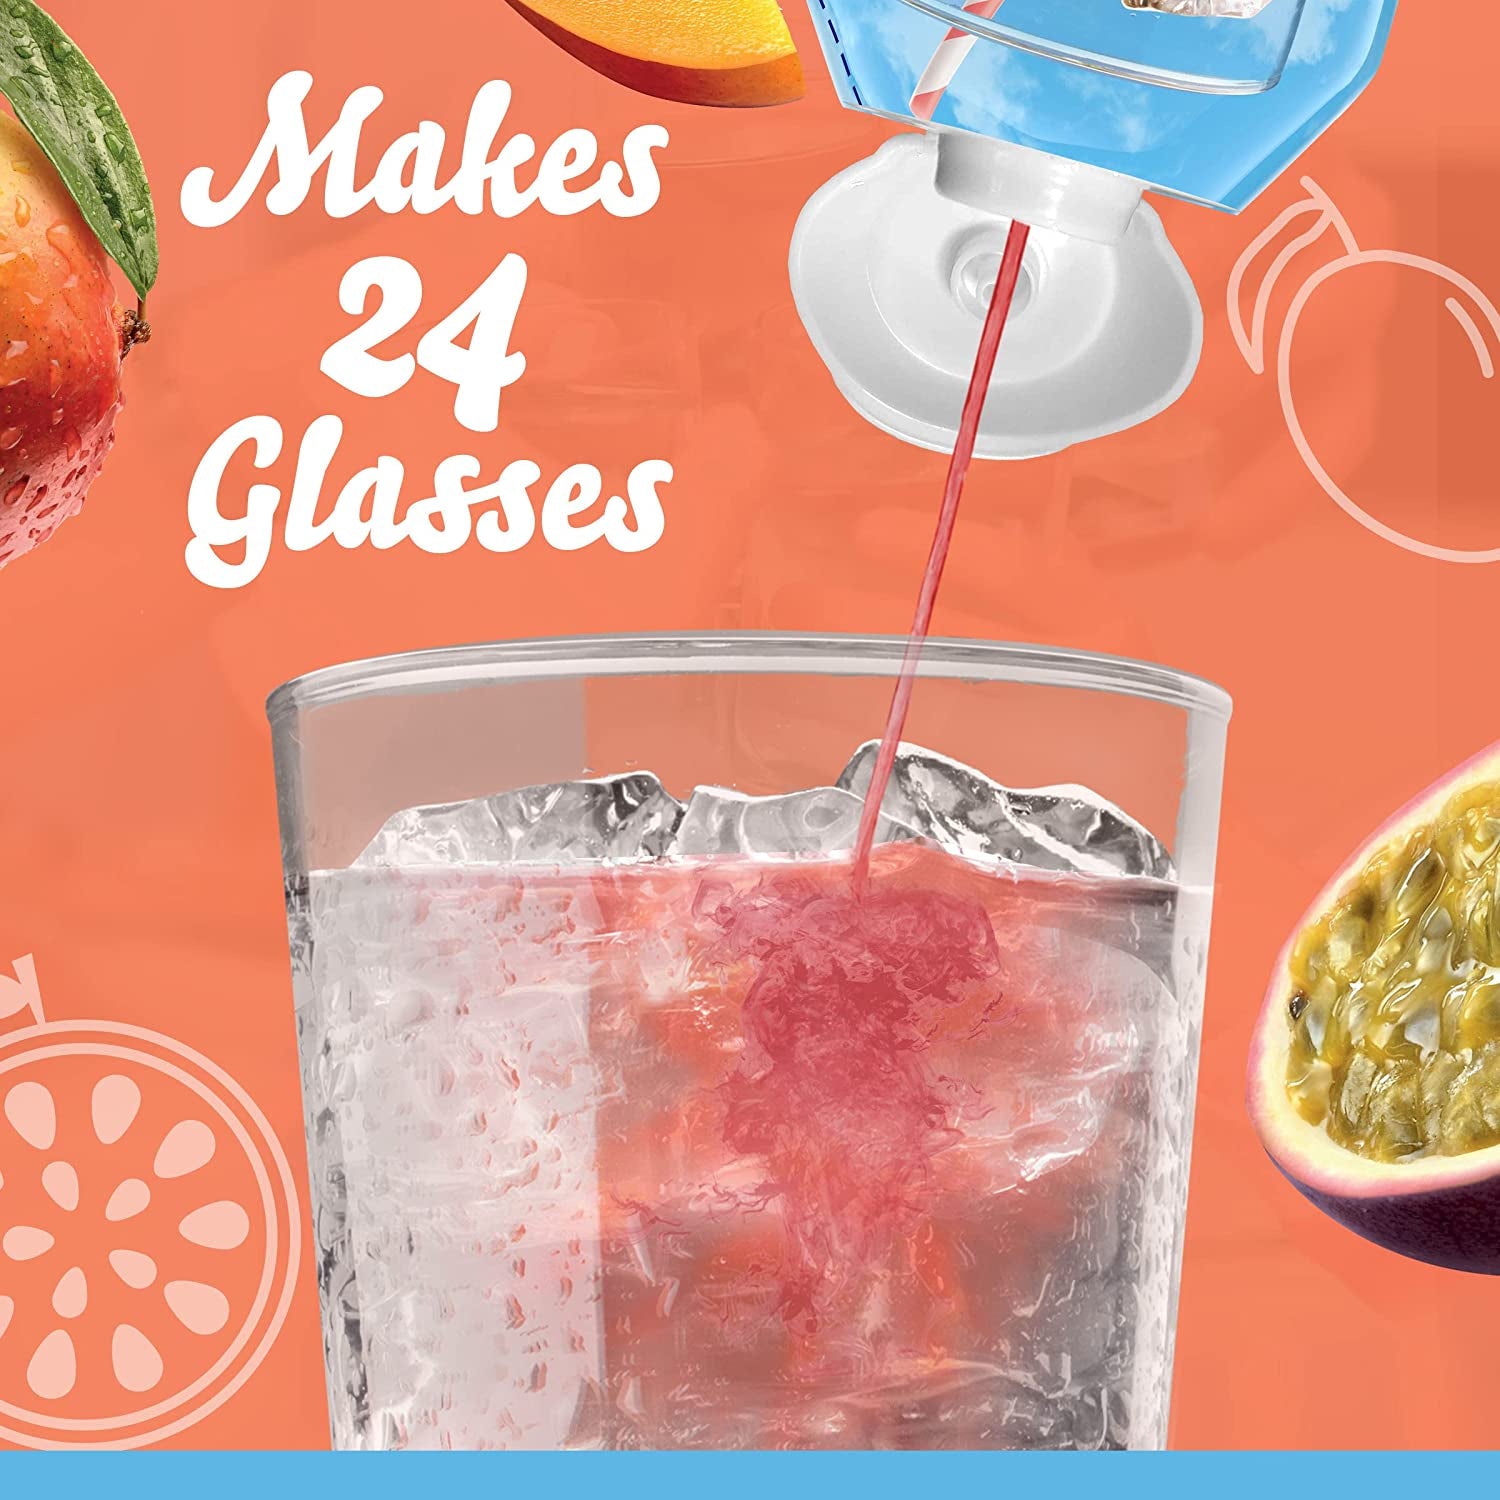 Crystal Light Sugar-Free Zero Calorie Liquid Water Enhancer - Mango Passionfruit Water Flavor Drink Mix (1.62 Fl Oz Bottle)